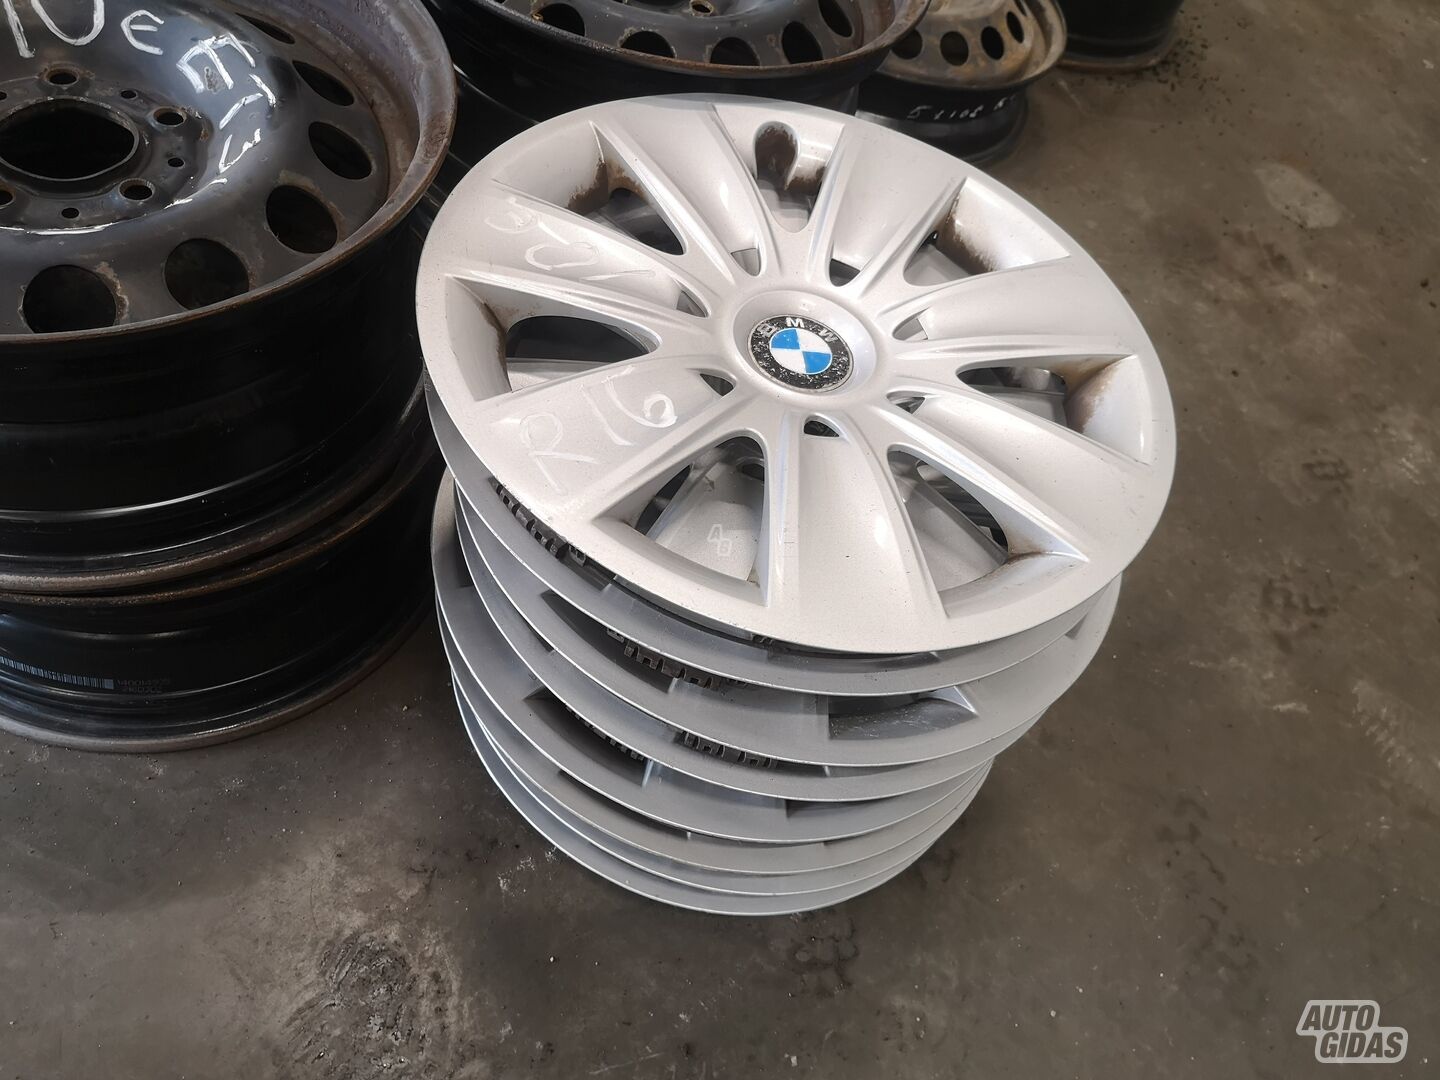 BMW R16 wheel caps